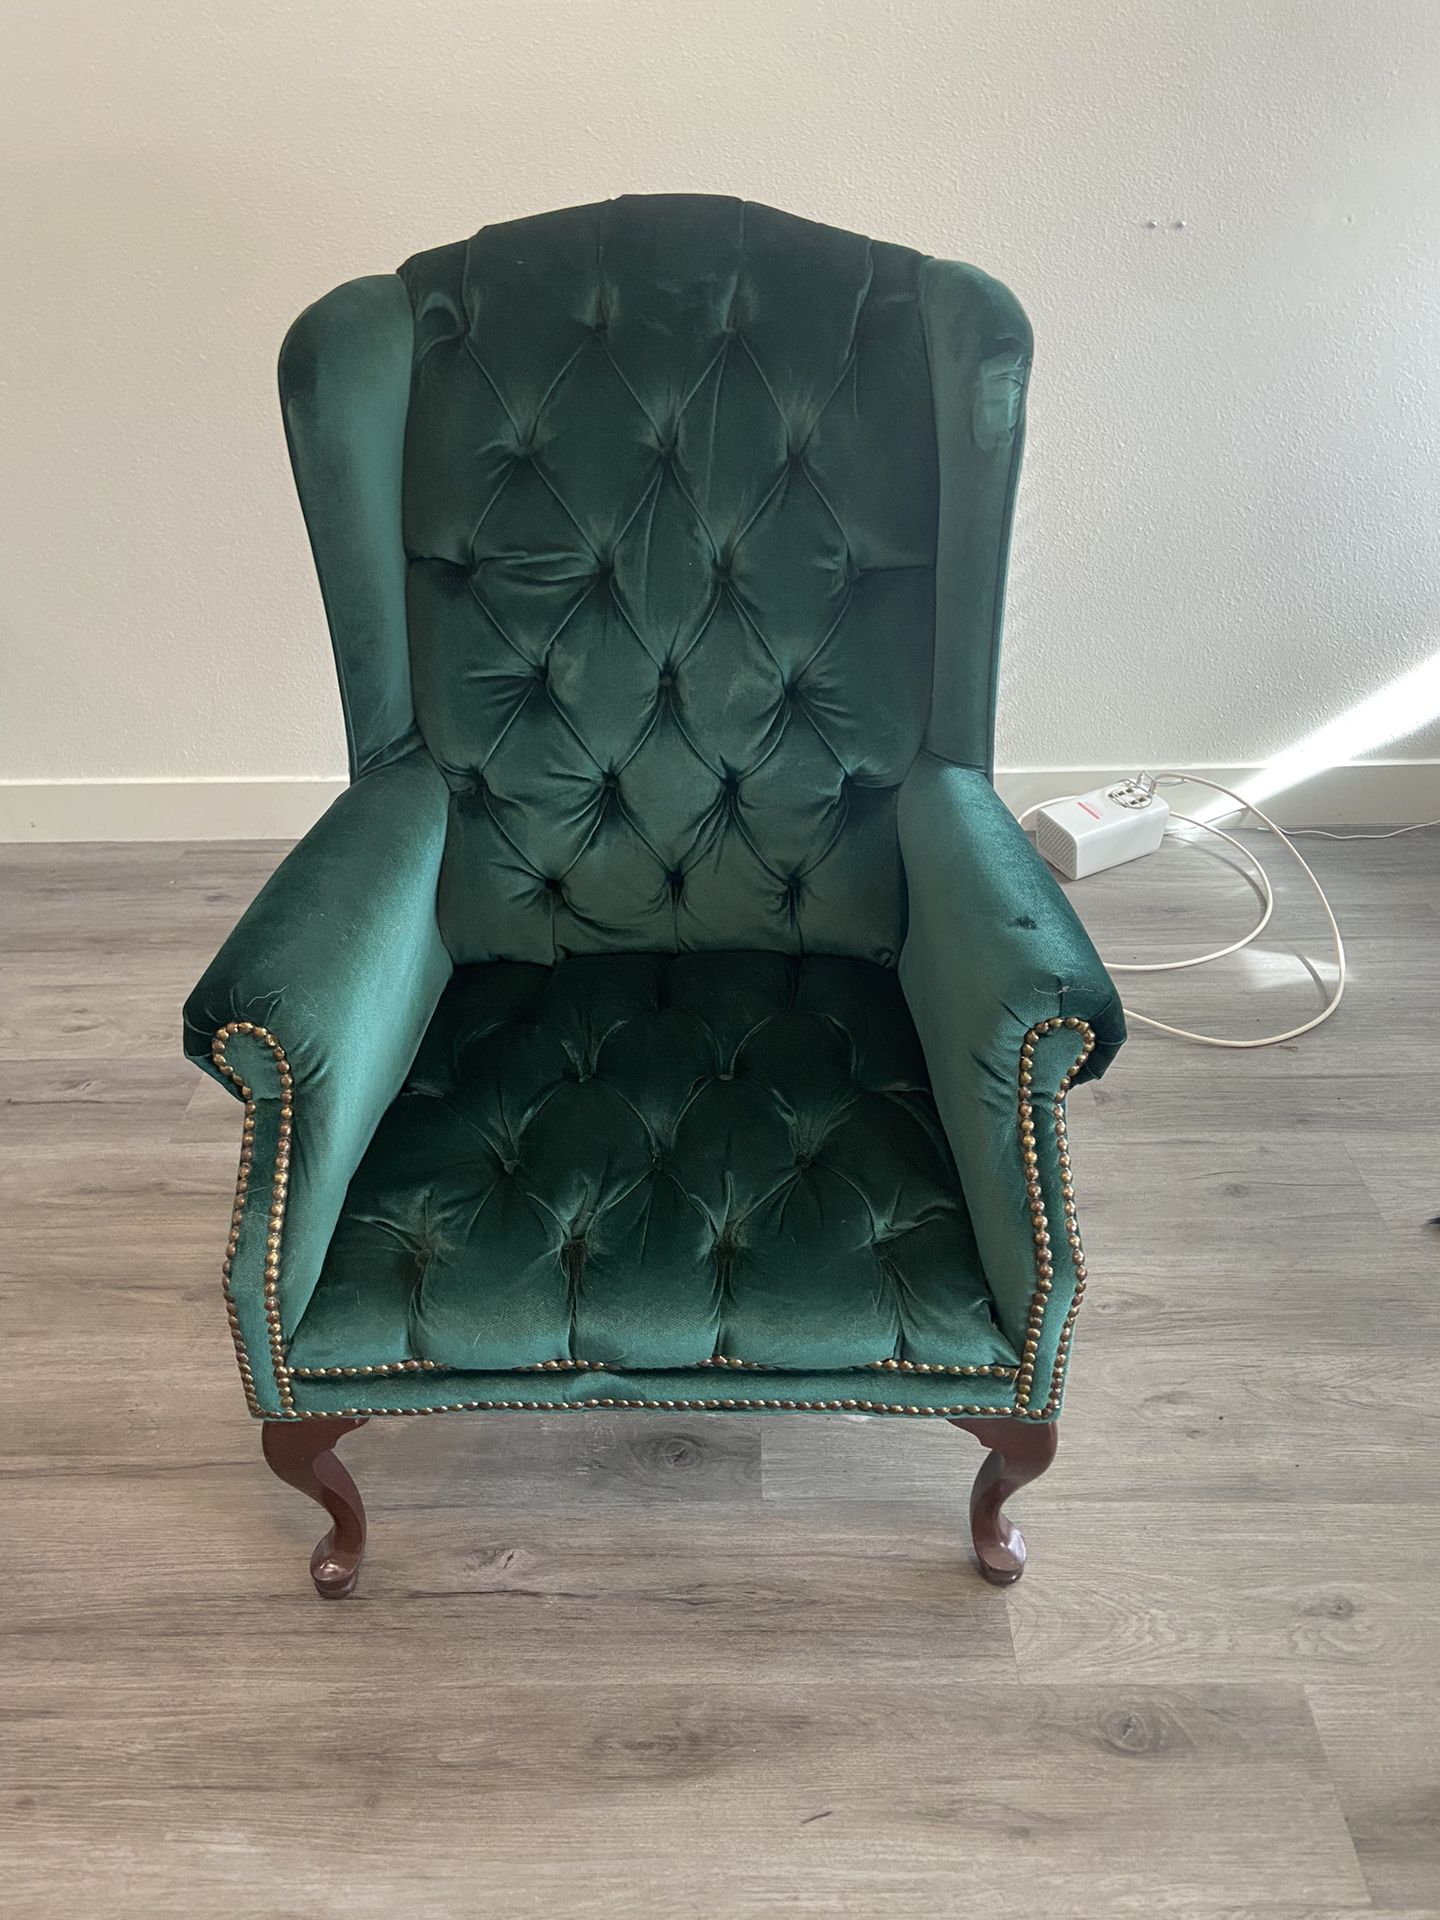 Vintage / Green Velvet/ Wingback / Tufted Arm Chair 